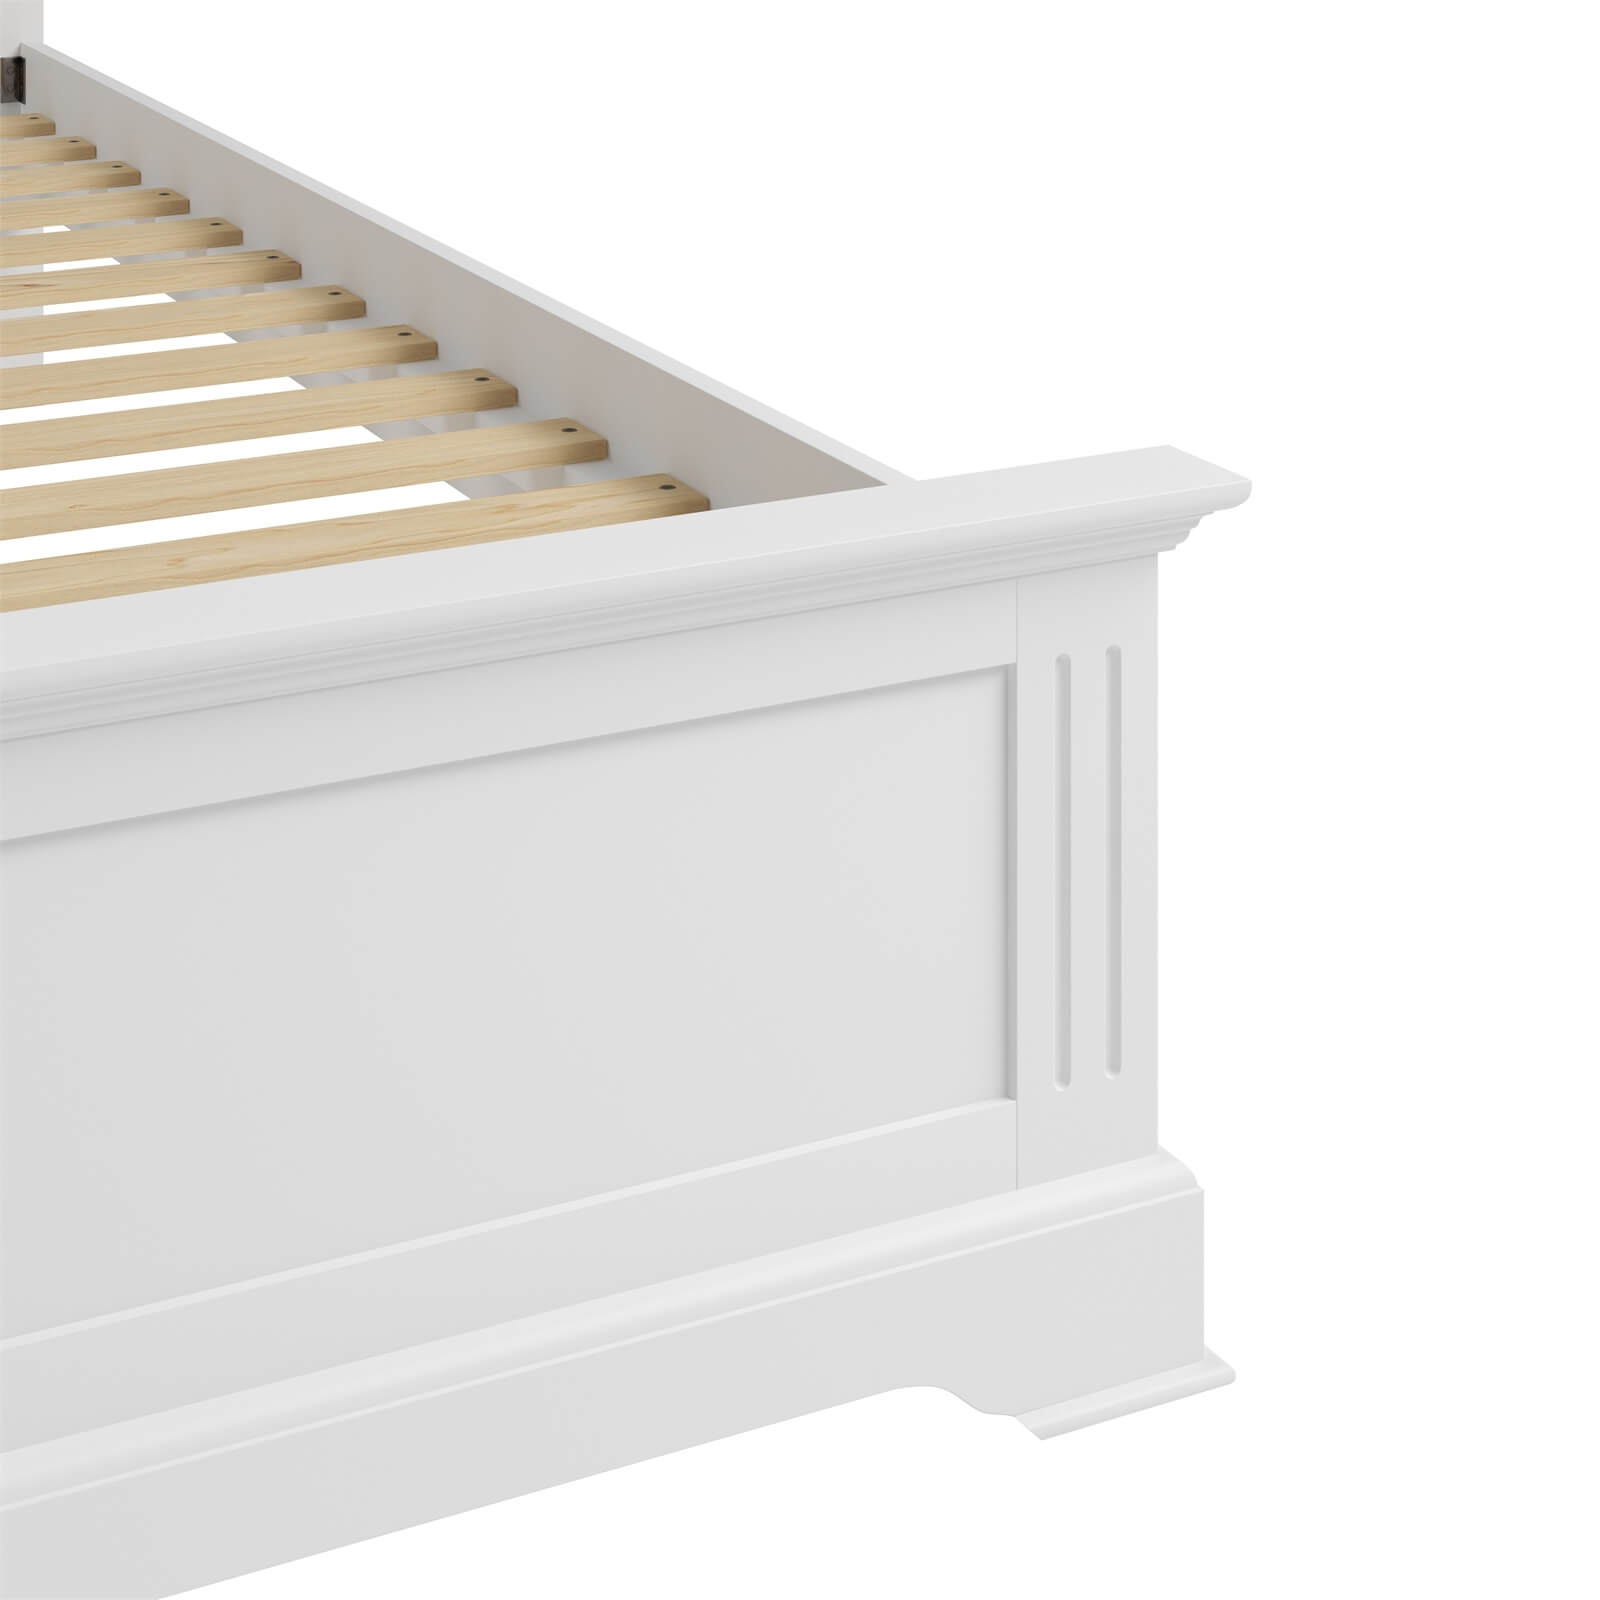 Camborne Single Bed Frame - White